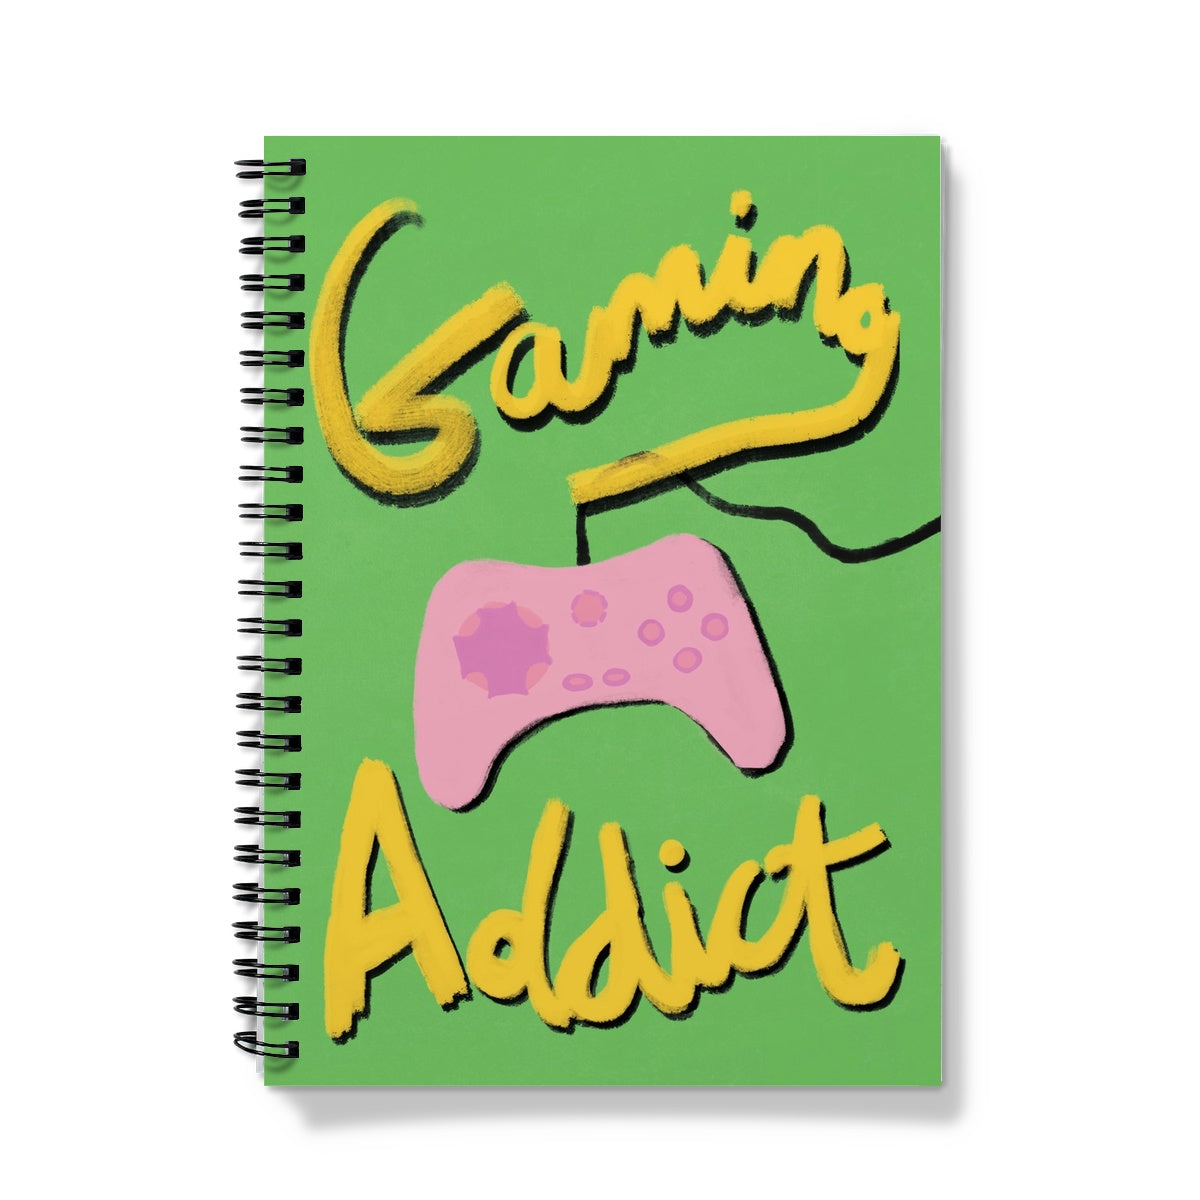 Gaming Addict Print - Green, Yellow, Pink Notebook